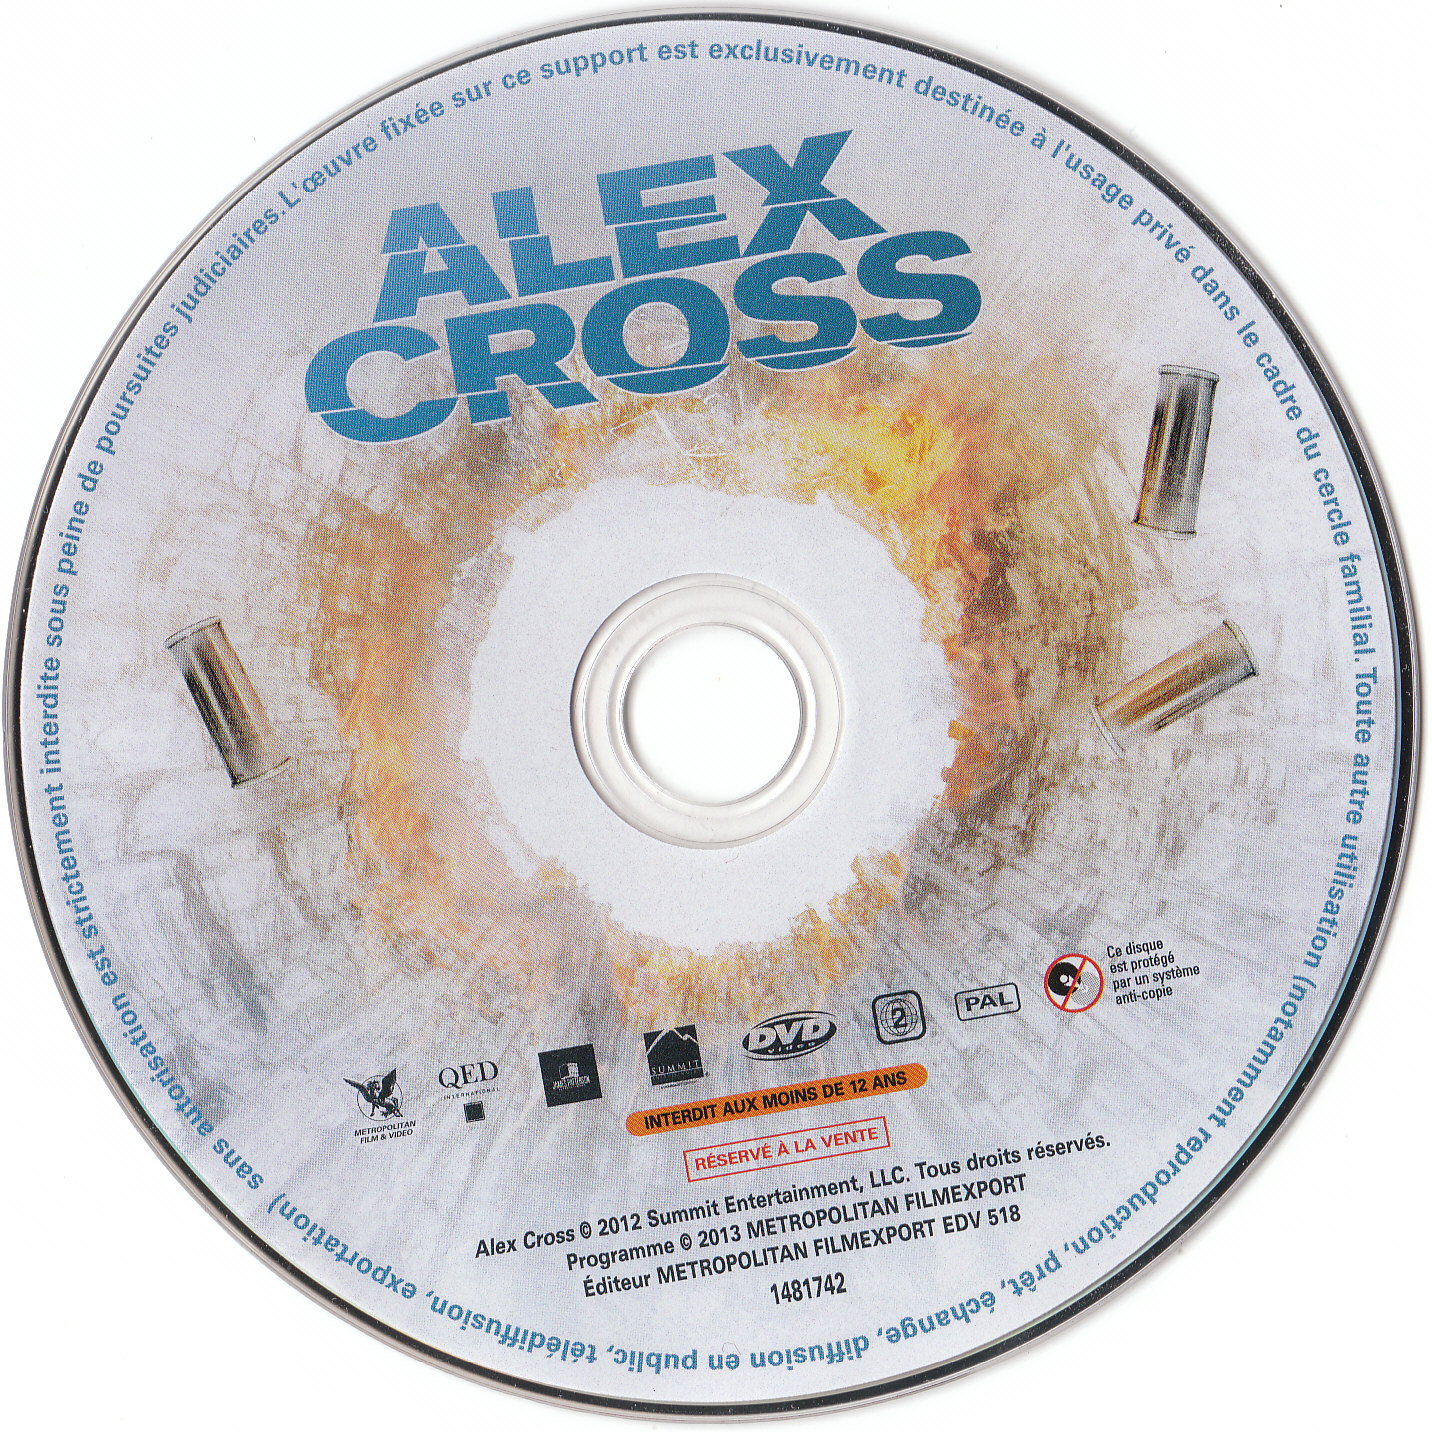 Alex Cross